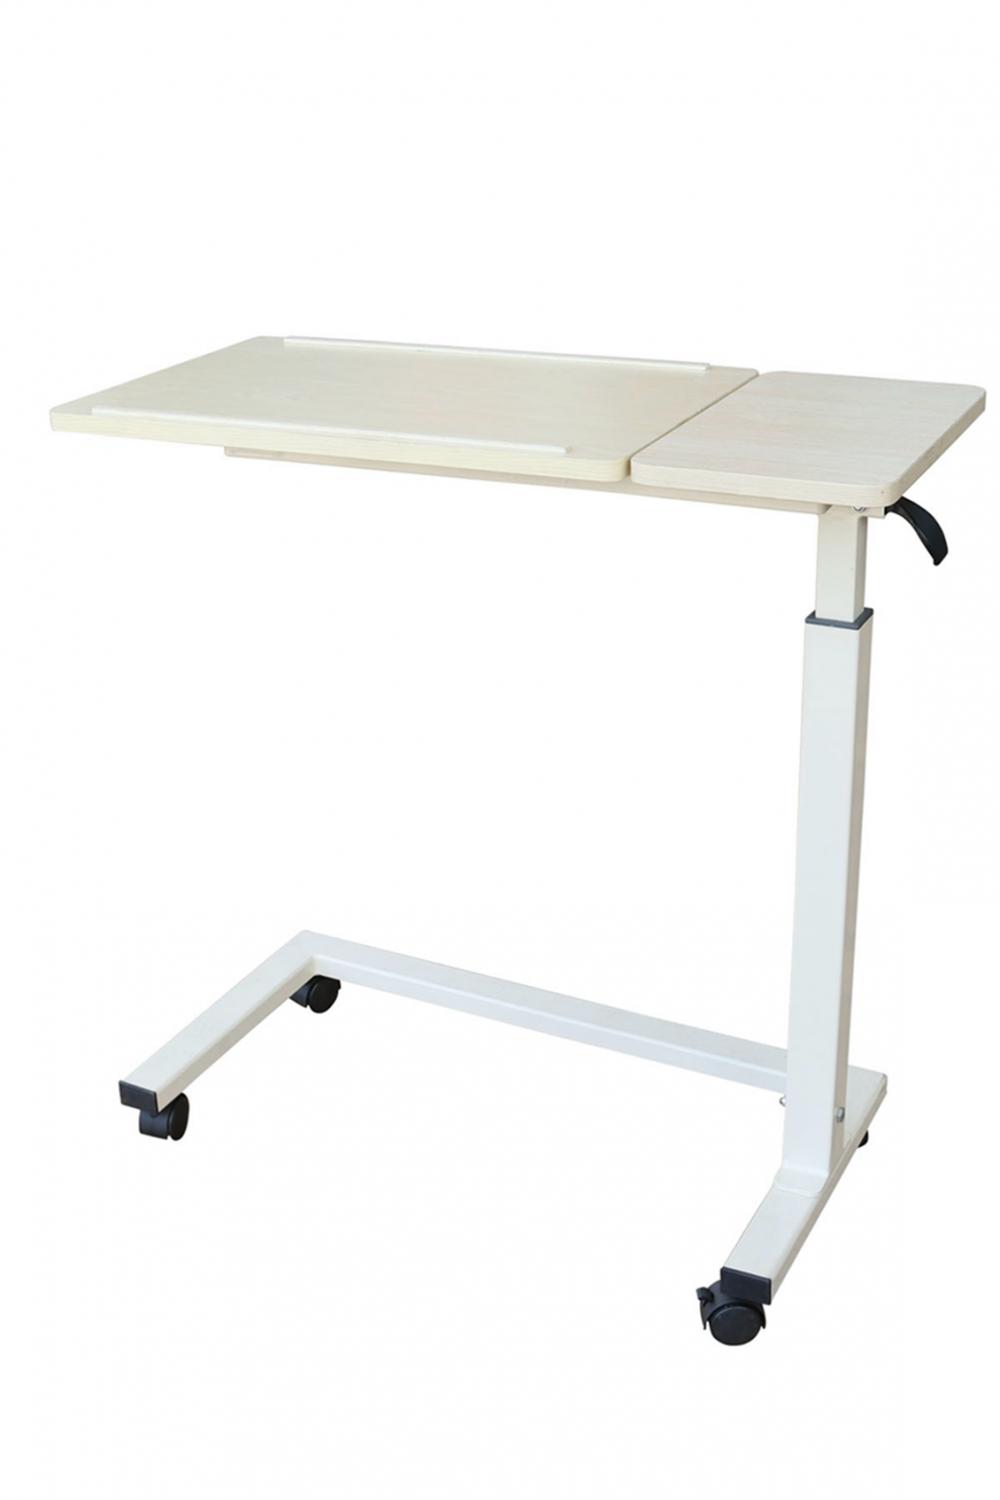 Tilt-Top Overbed Bedside Table with Wheels for Hospital